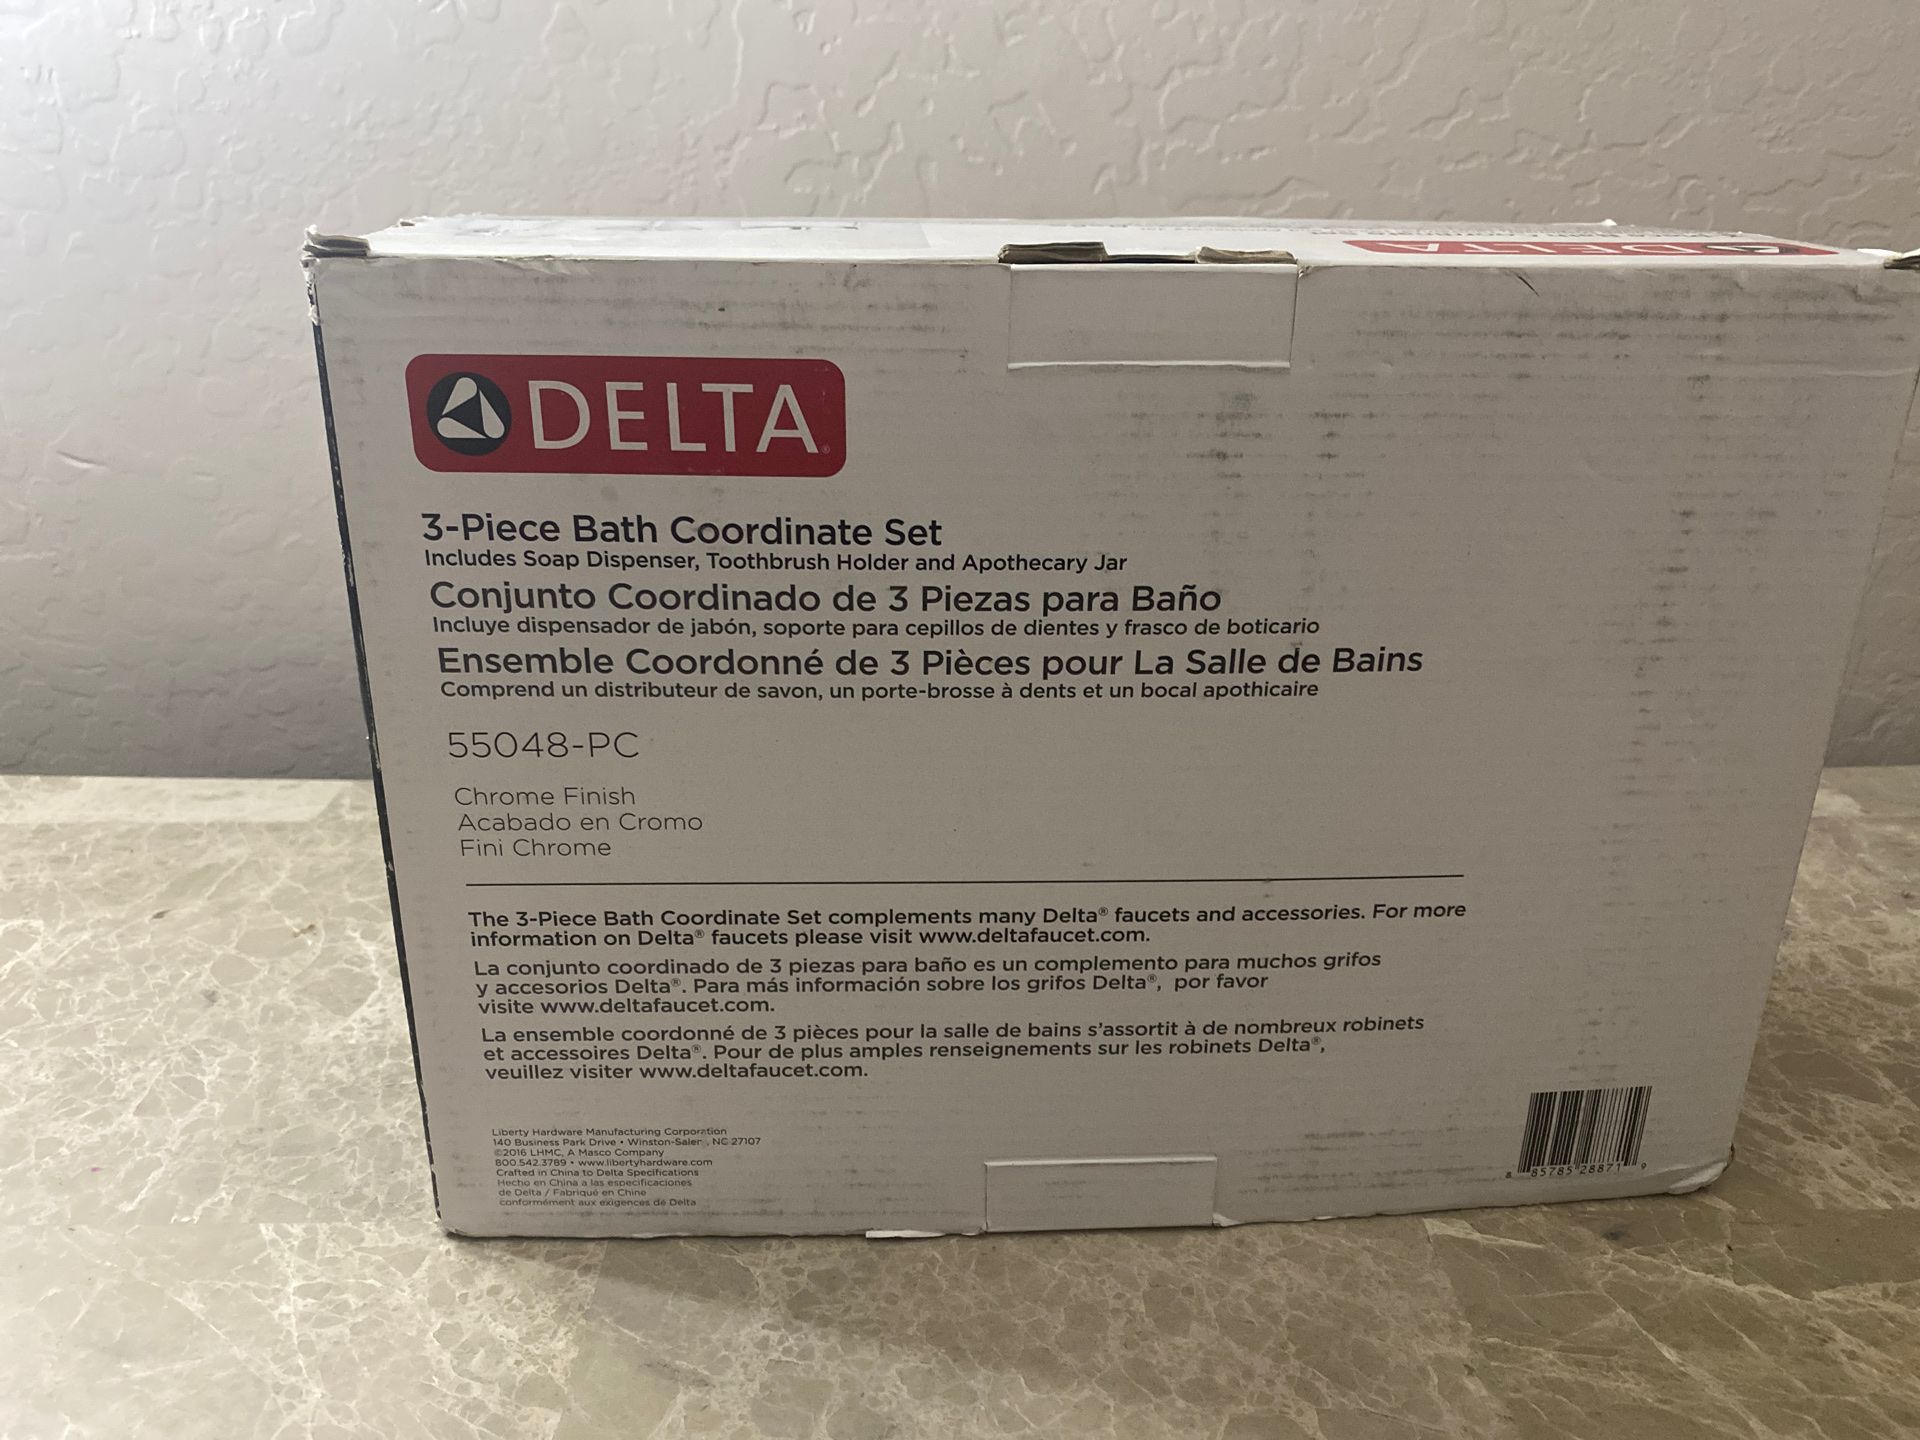 Delta 3-piece bath coordinate set